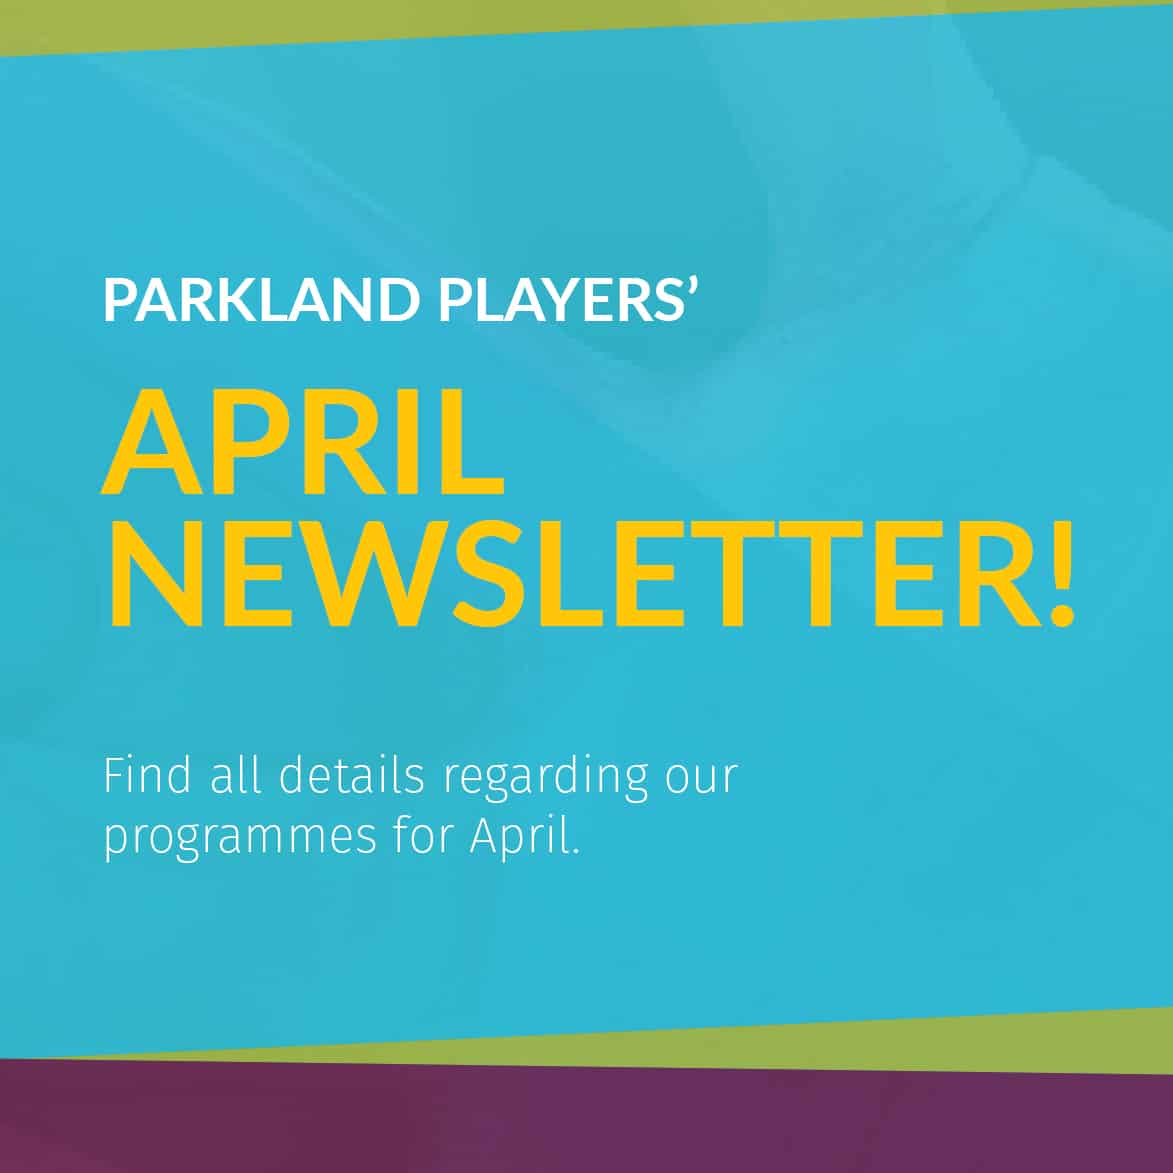 ParklandPlayers April newsletter